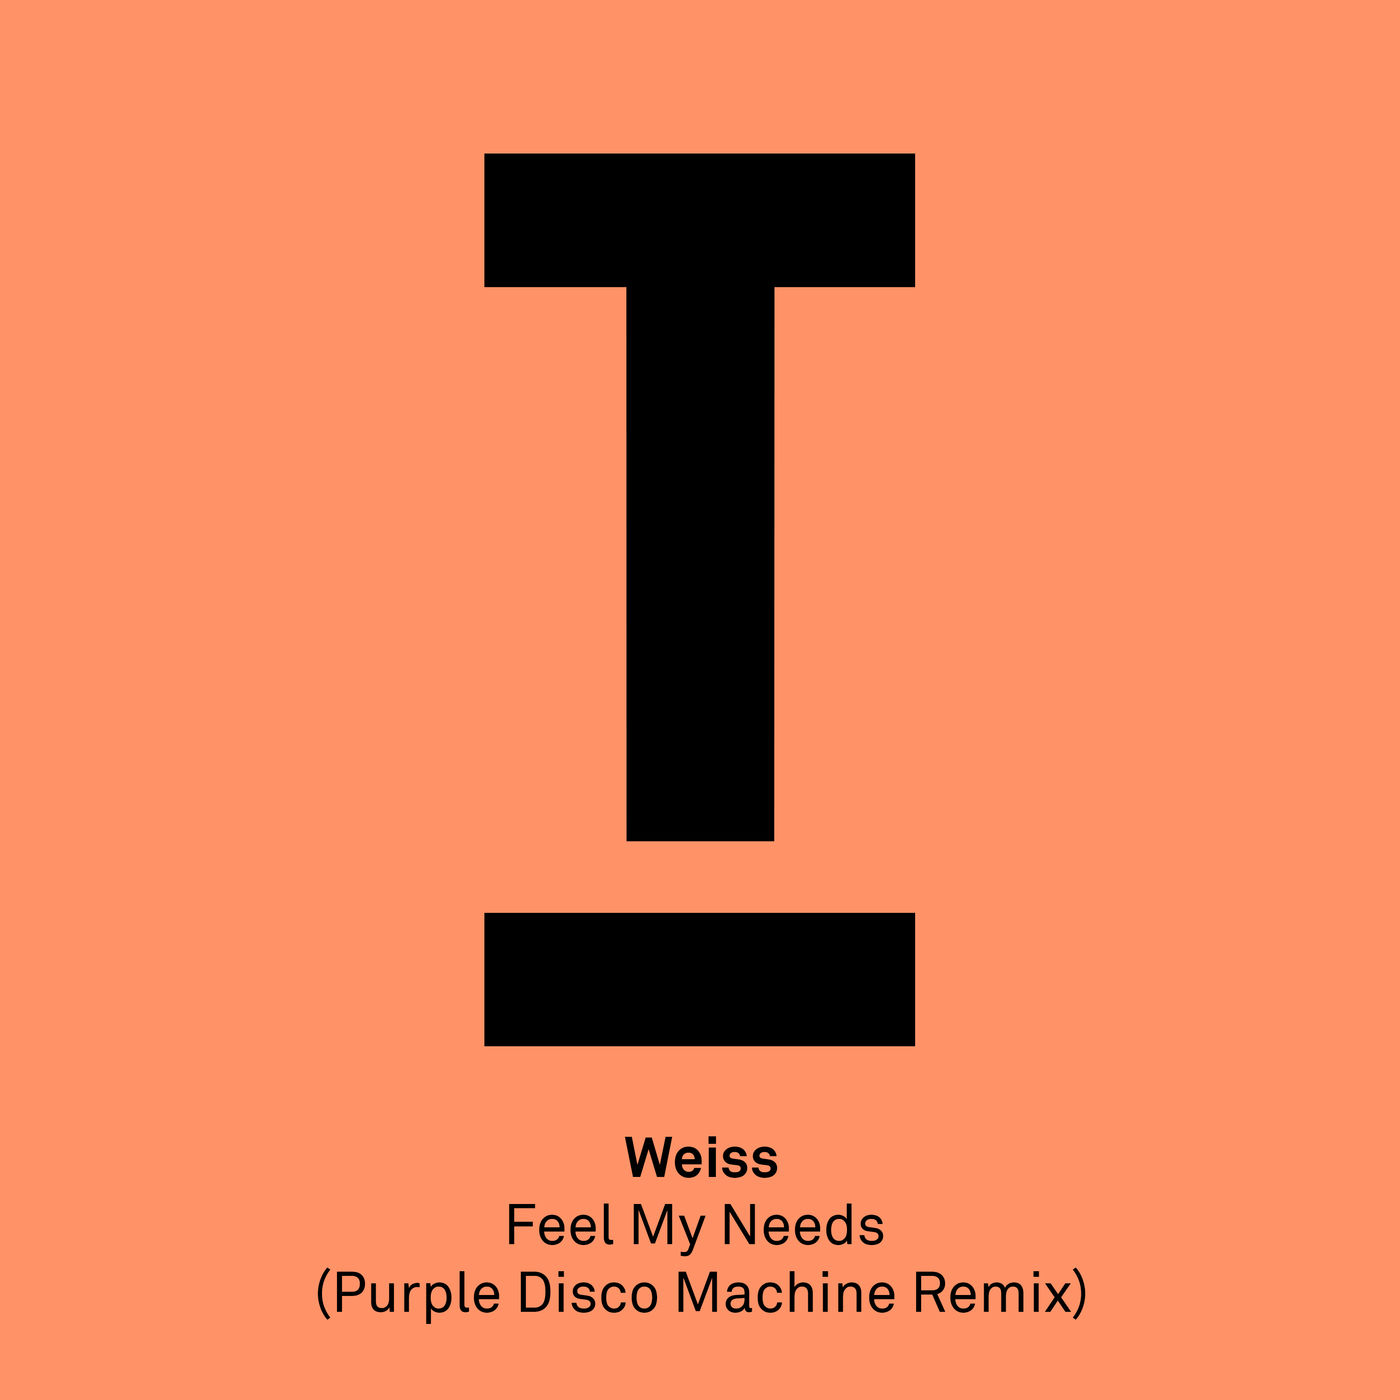 Weiss (UK) - Feel My Needs (Purple Disco Machine Remix) / Toolroom Productions